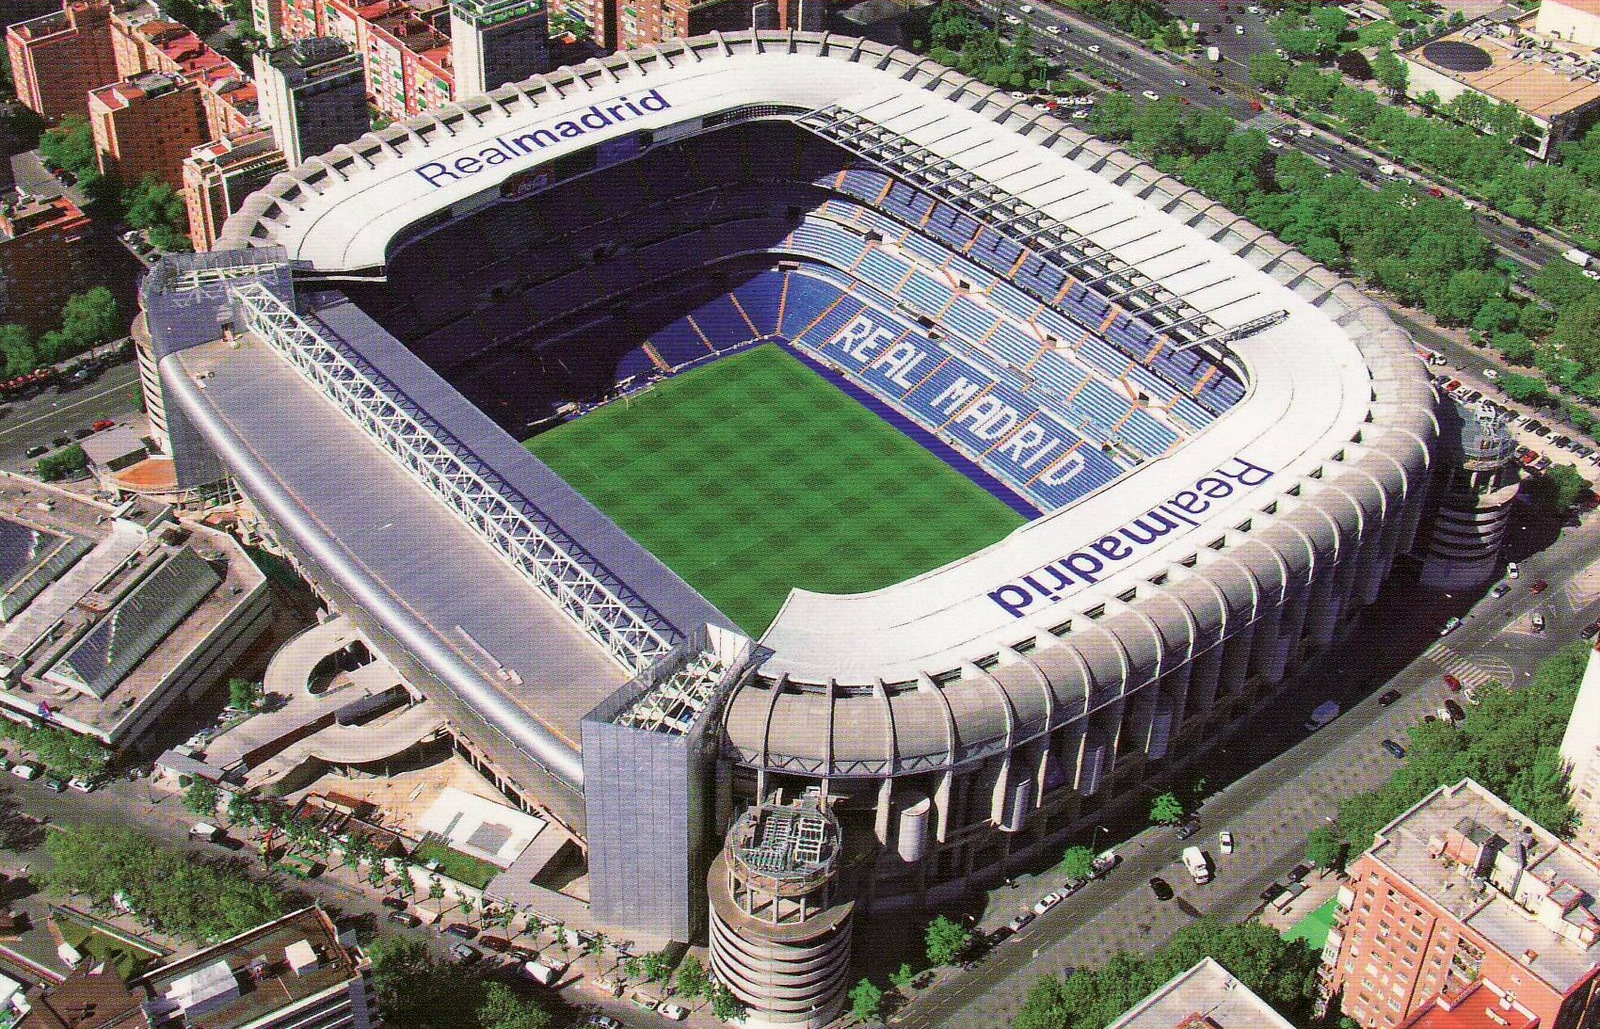 Santiago Bernabeu Stadium in Madrid, Spain